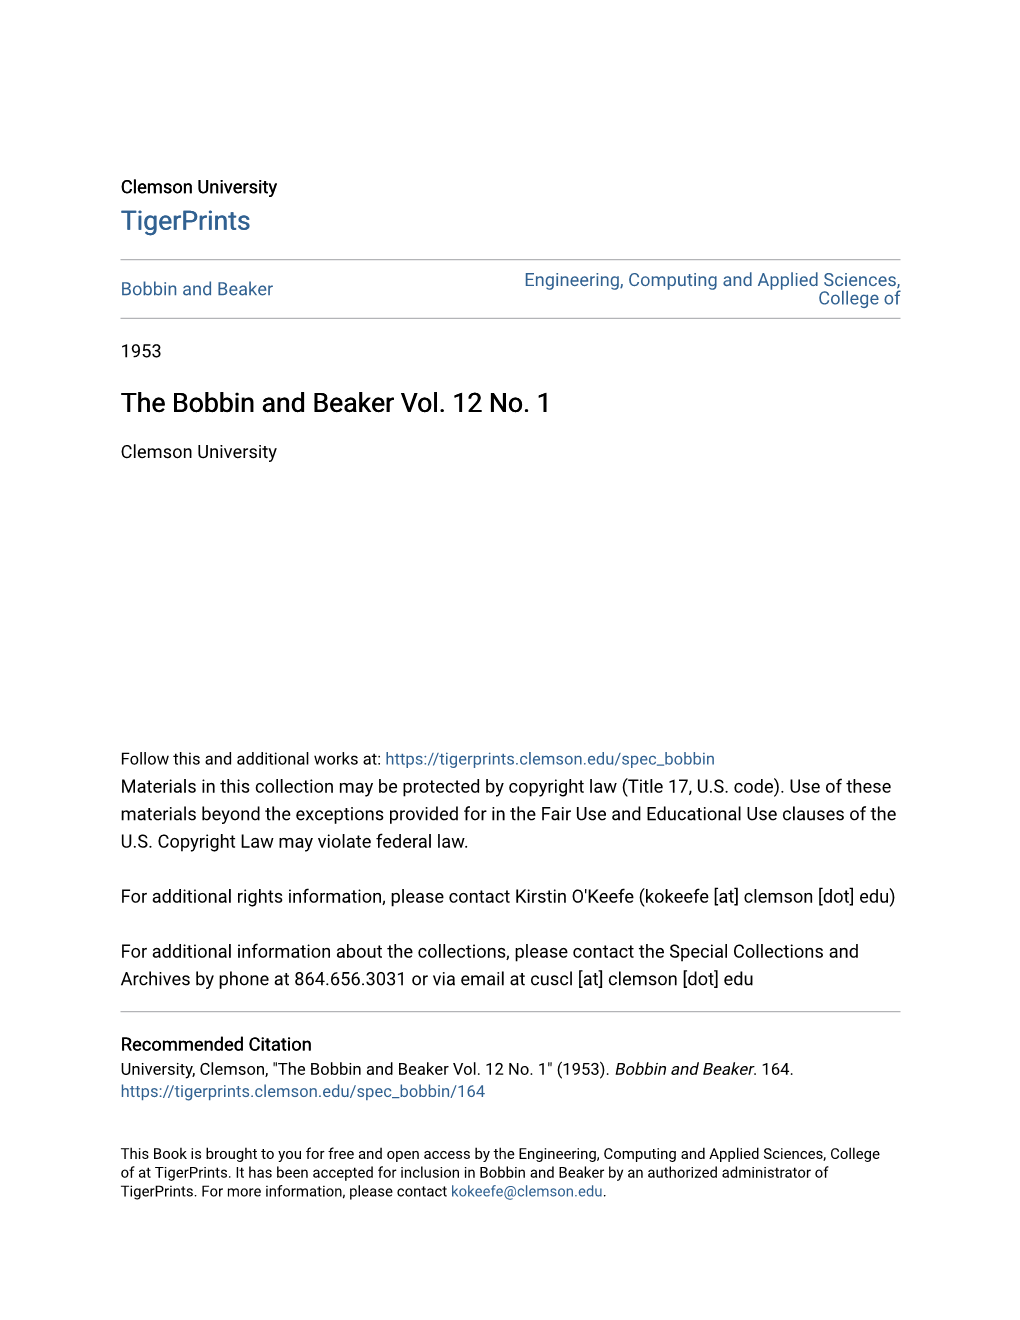 The Bobbin and Beaker Vol. 12 No. 1